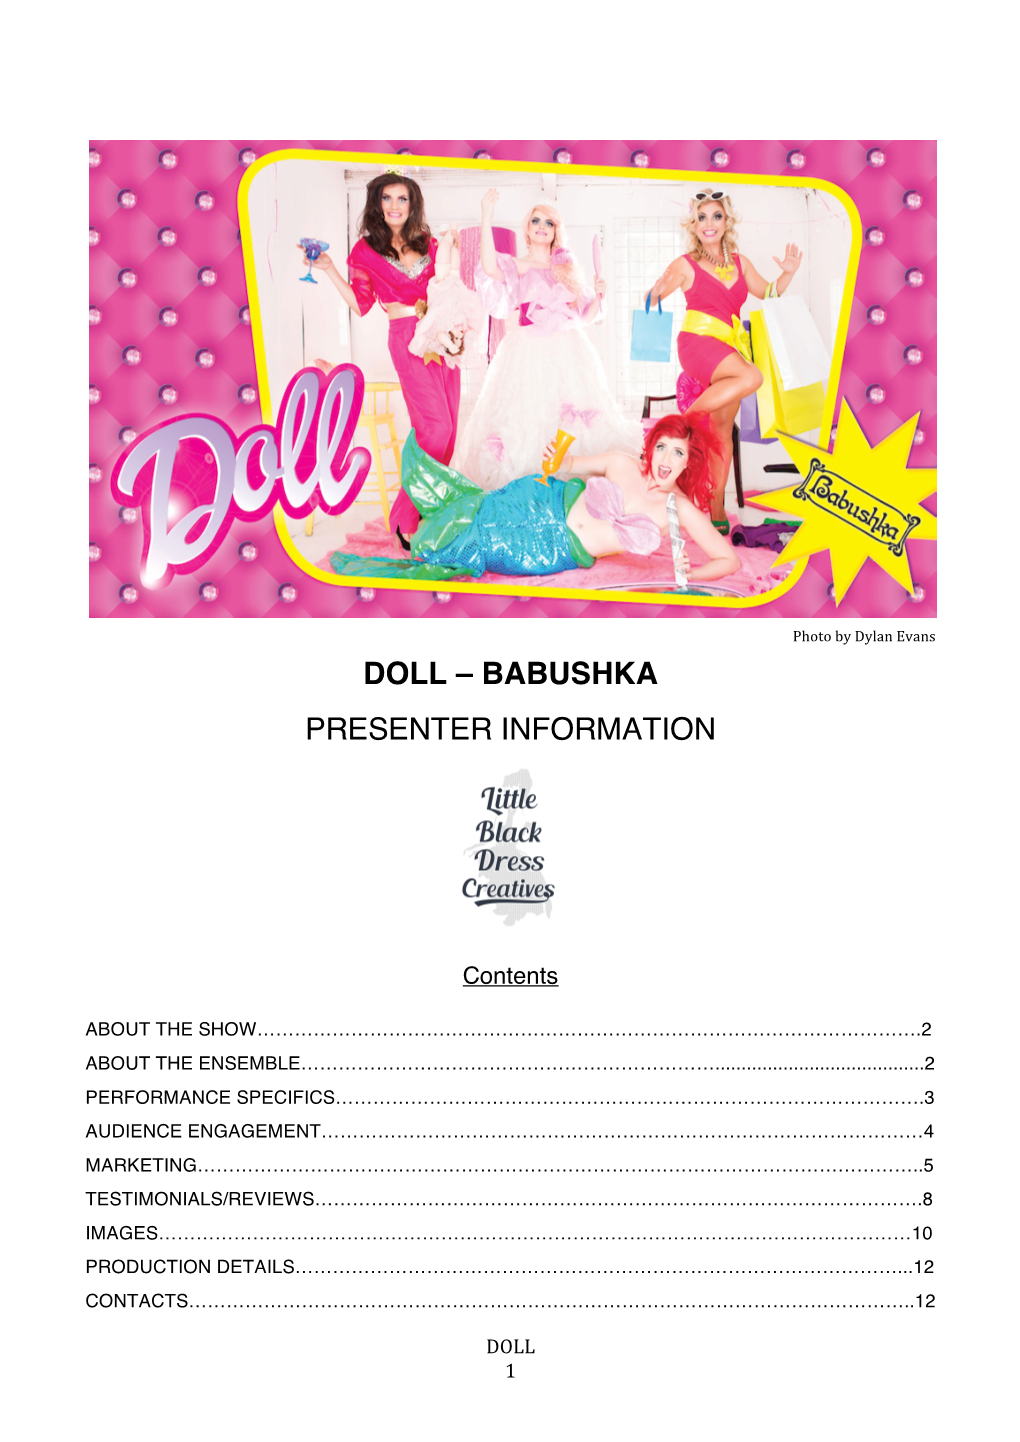 Doll – Babushka Presenter Information